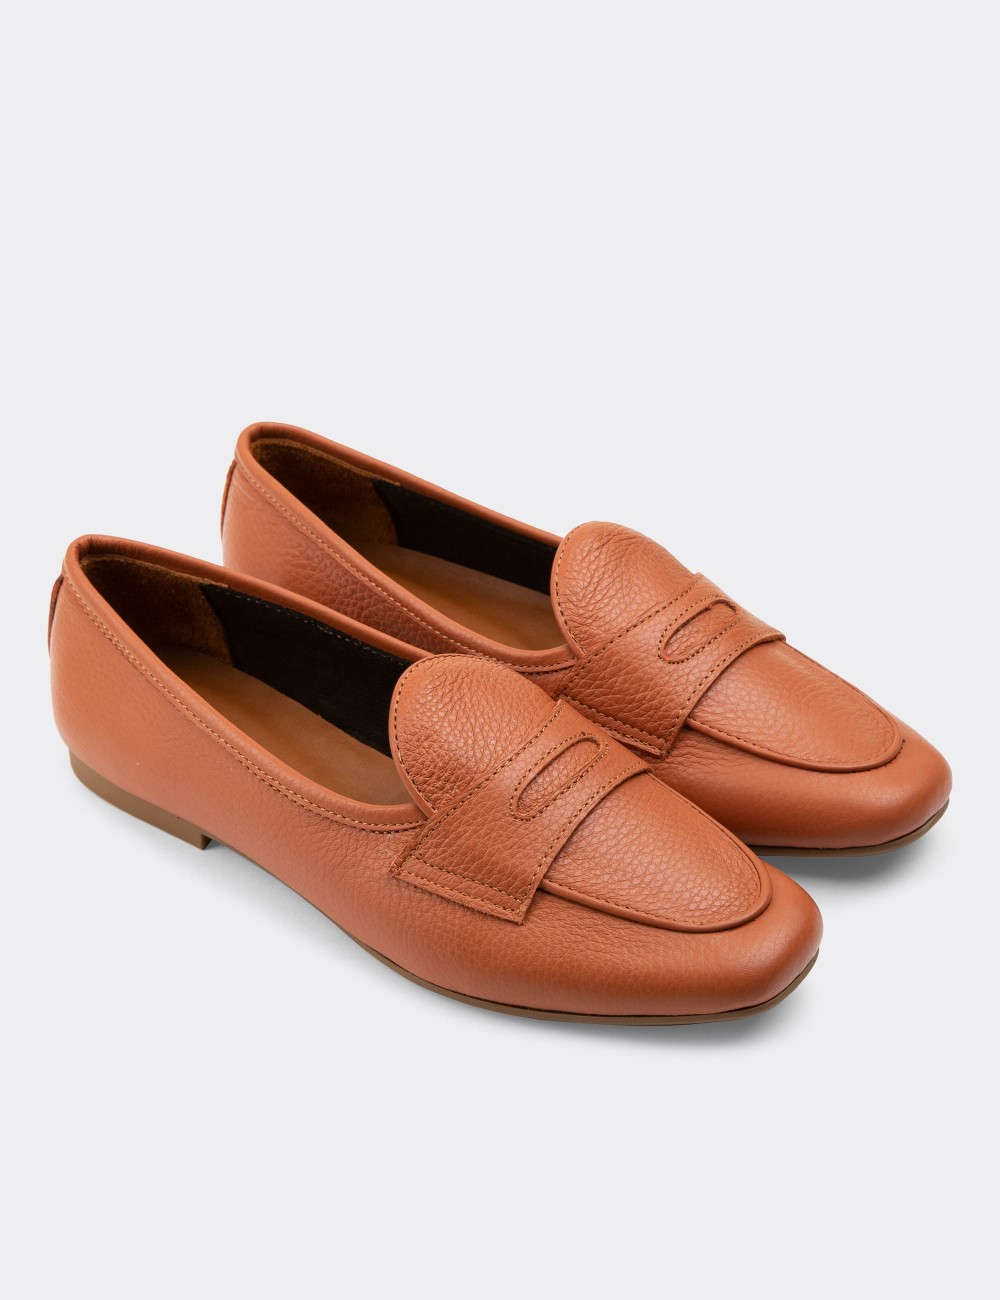 Orange  Leather Loafers - 01910ZTRCC01